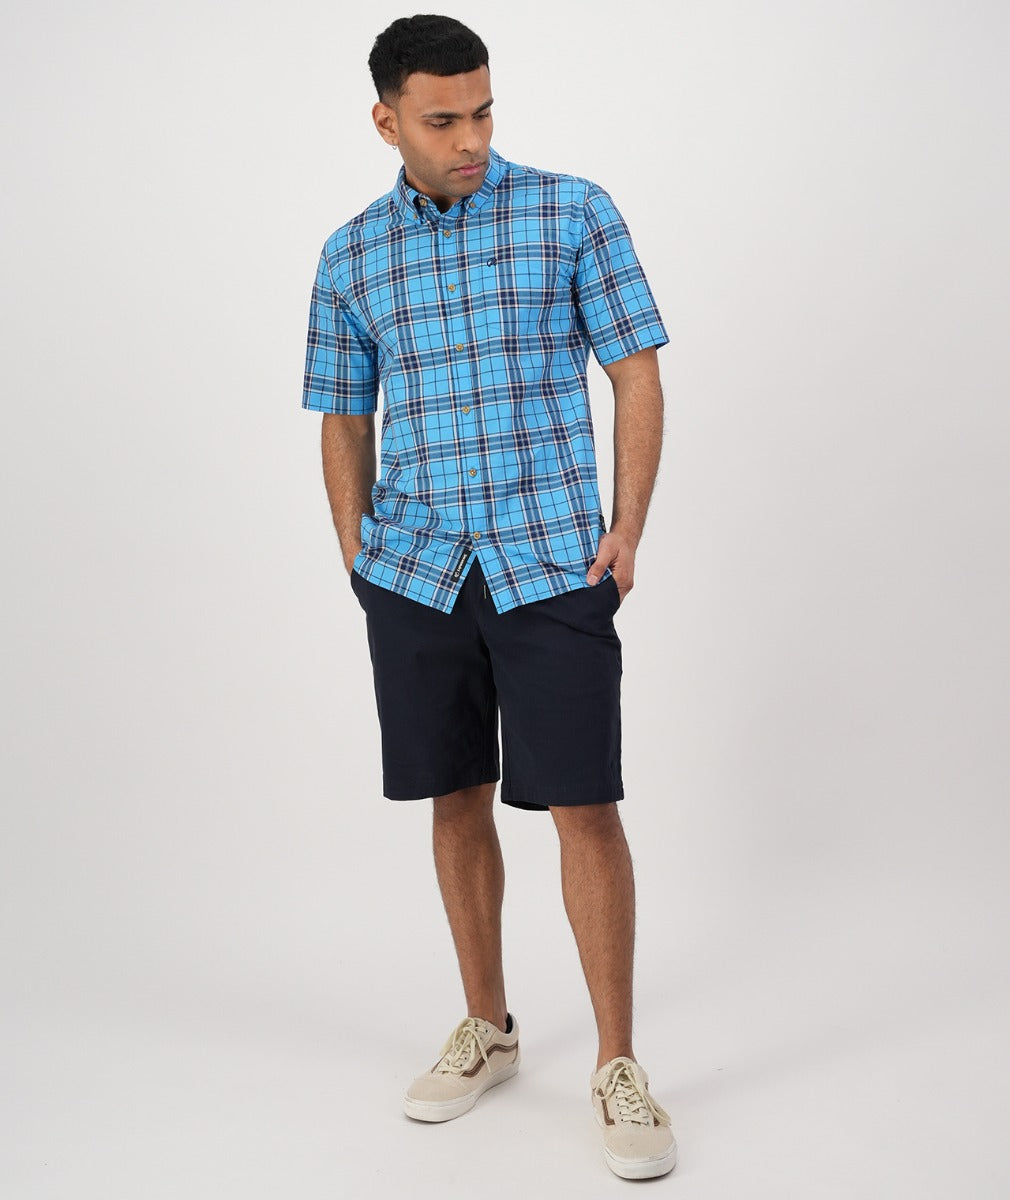 Grendon Short Sleeve Shirt | Azure/Navy Check